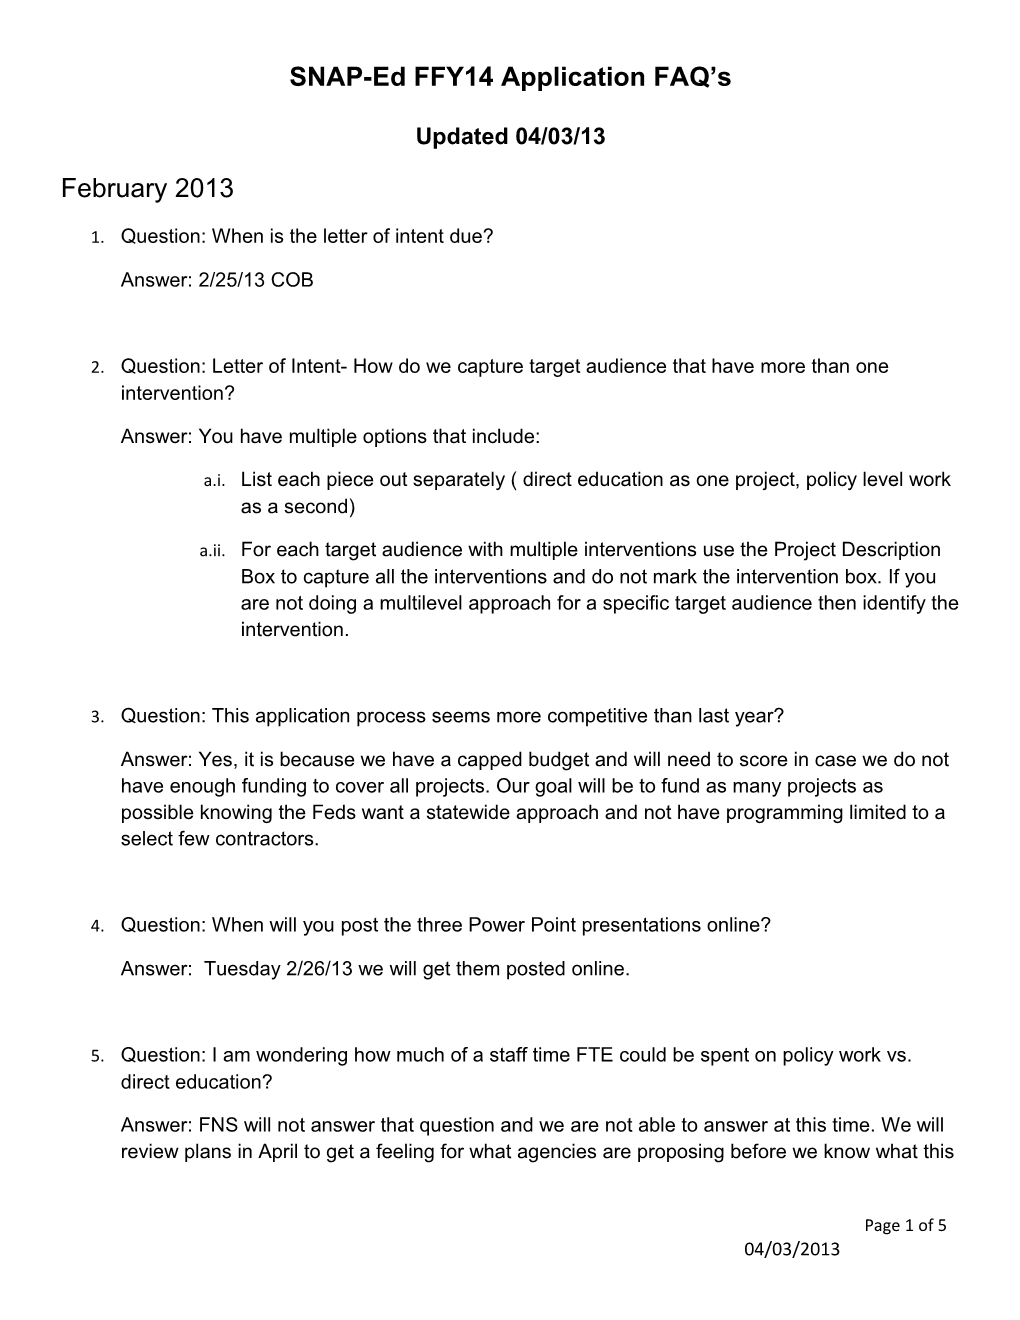 SNAP-Ed Federal Fiscal Year 2014 Application FAQ's